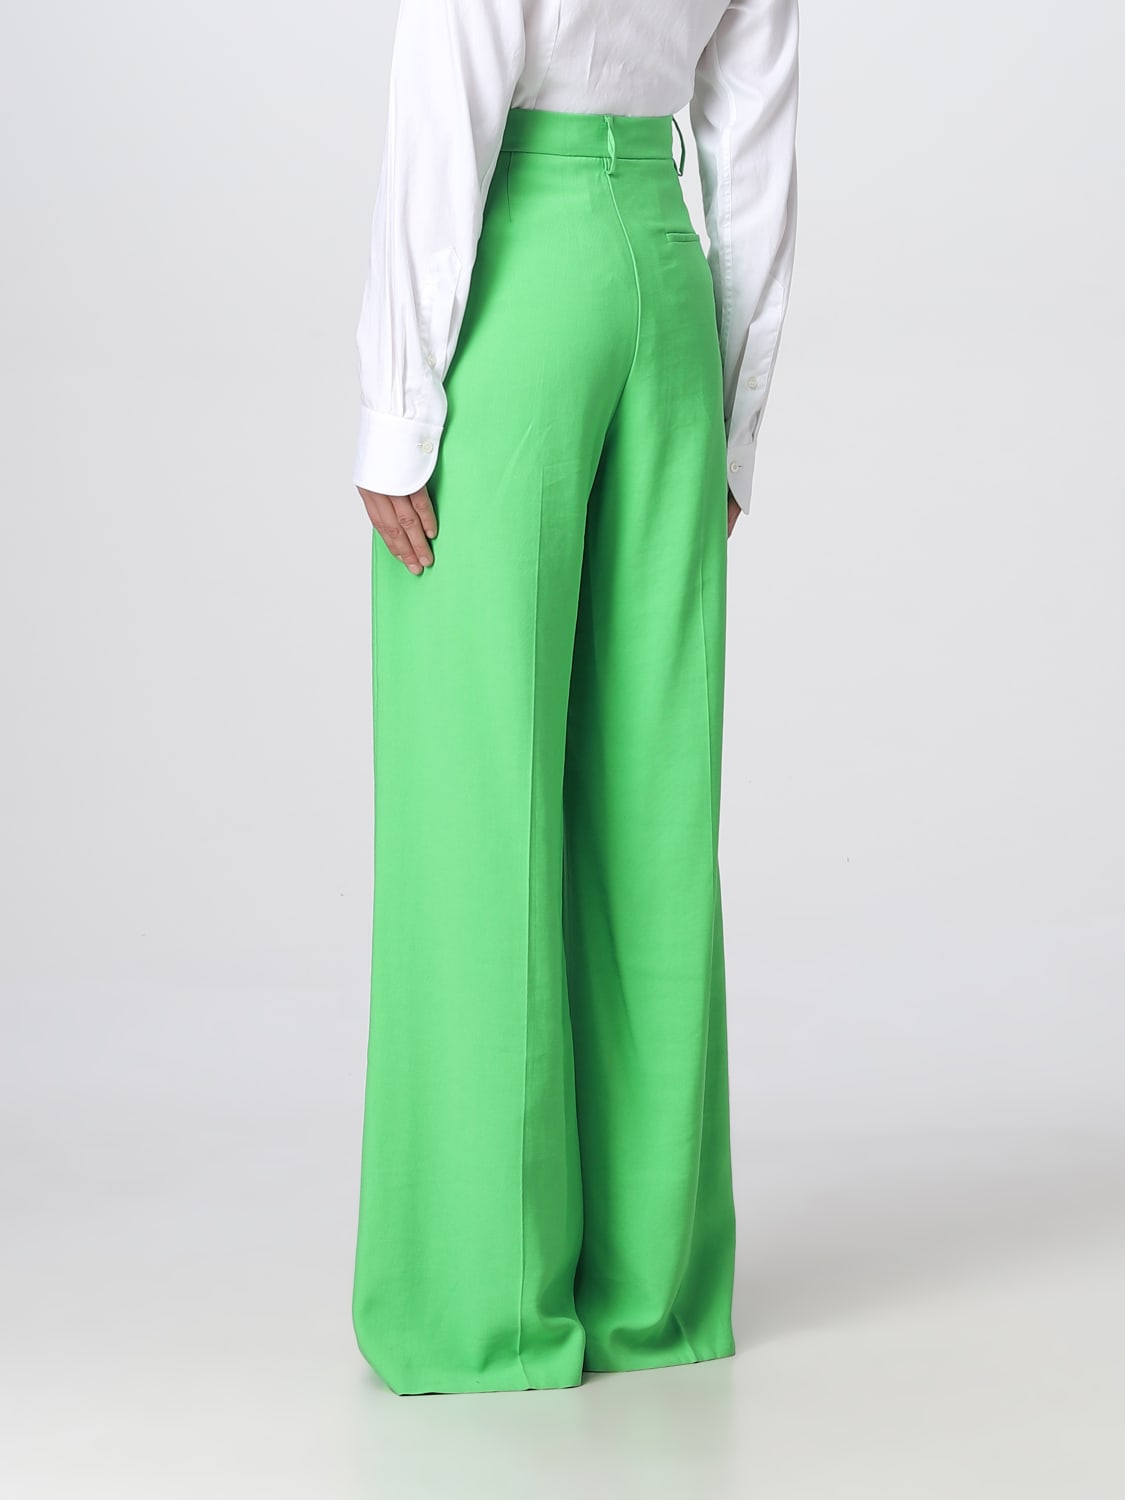 Pantalon Femme Vert